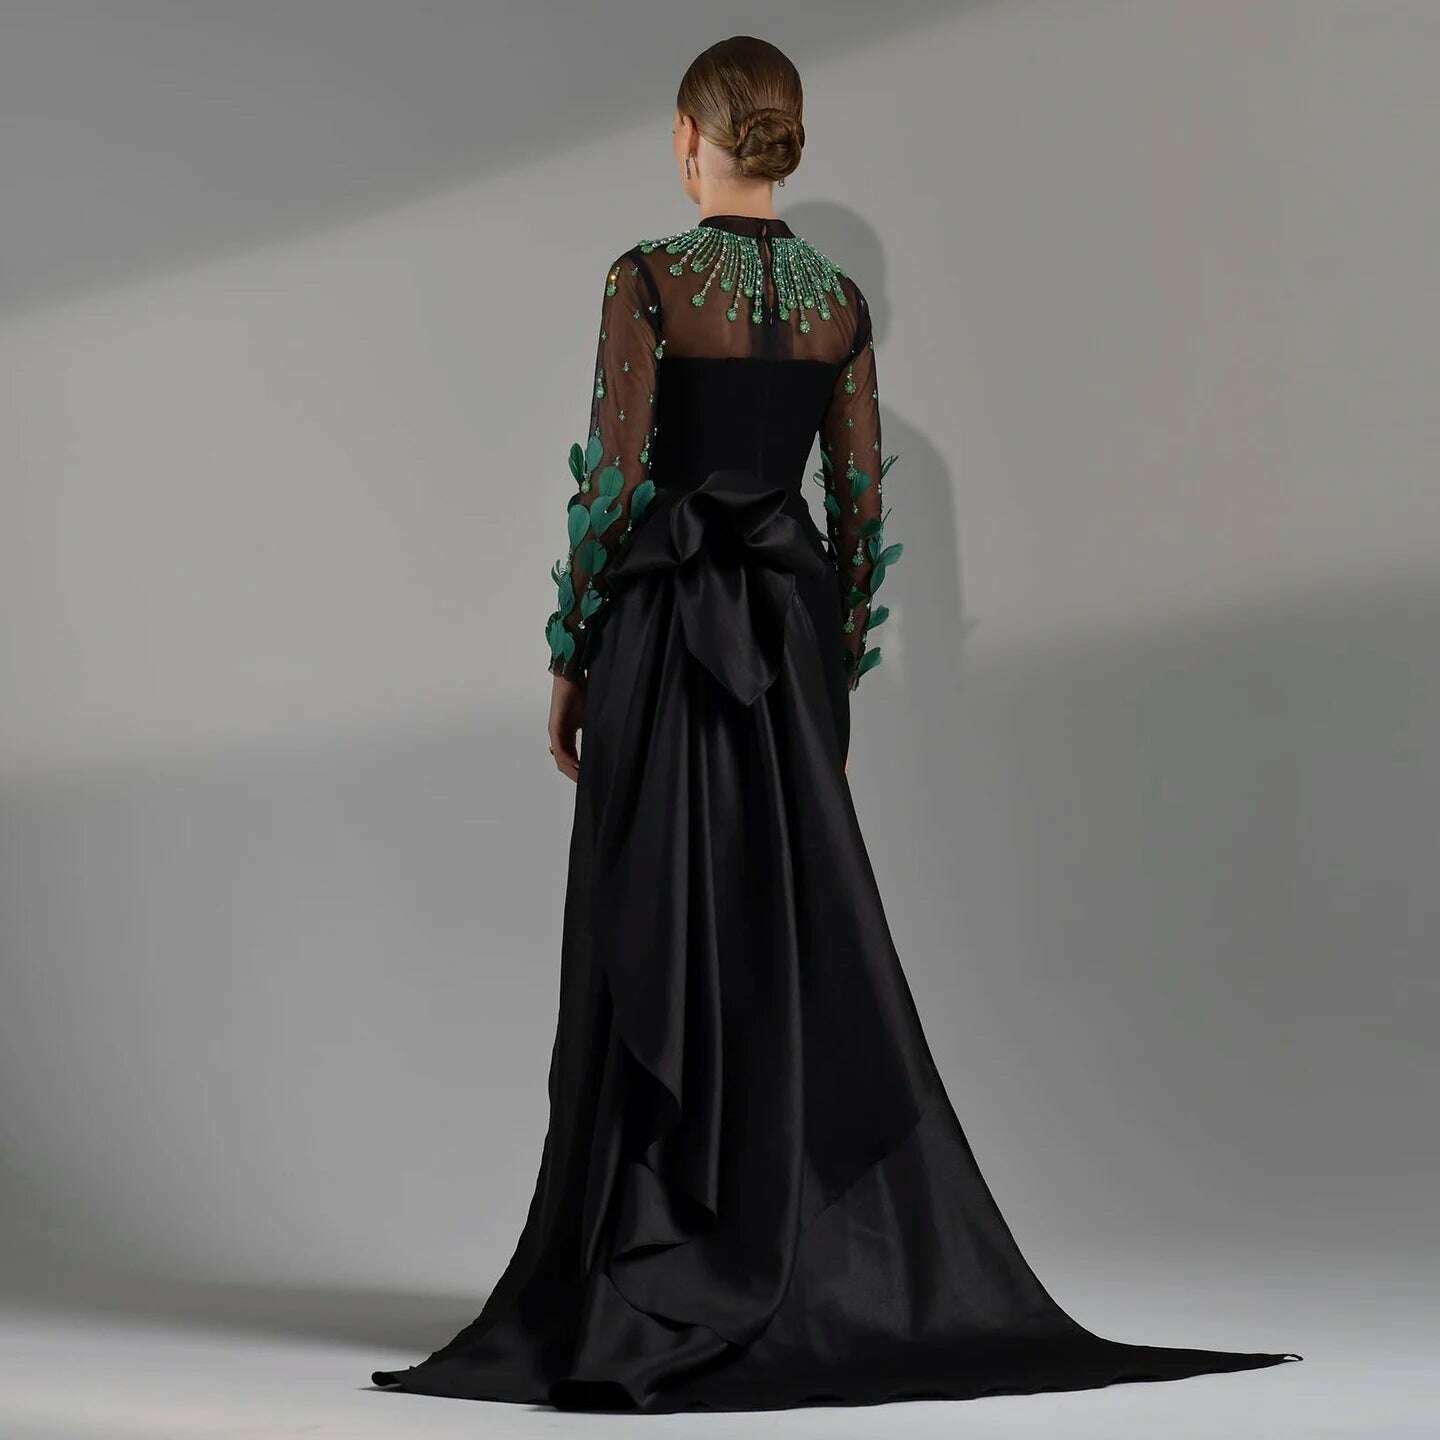 KIMLUD, Sharon Said Luxury Dubai Emerald Green Feathers Black Evening Dress Long Sleeves Saudi Arabia Women Formal Party Gowns SS457, KIMLUD Womens Clothes